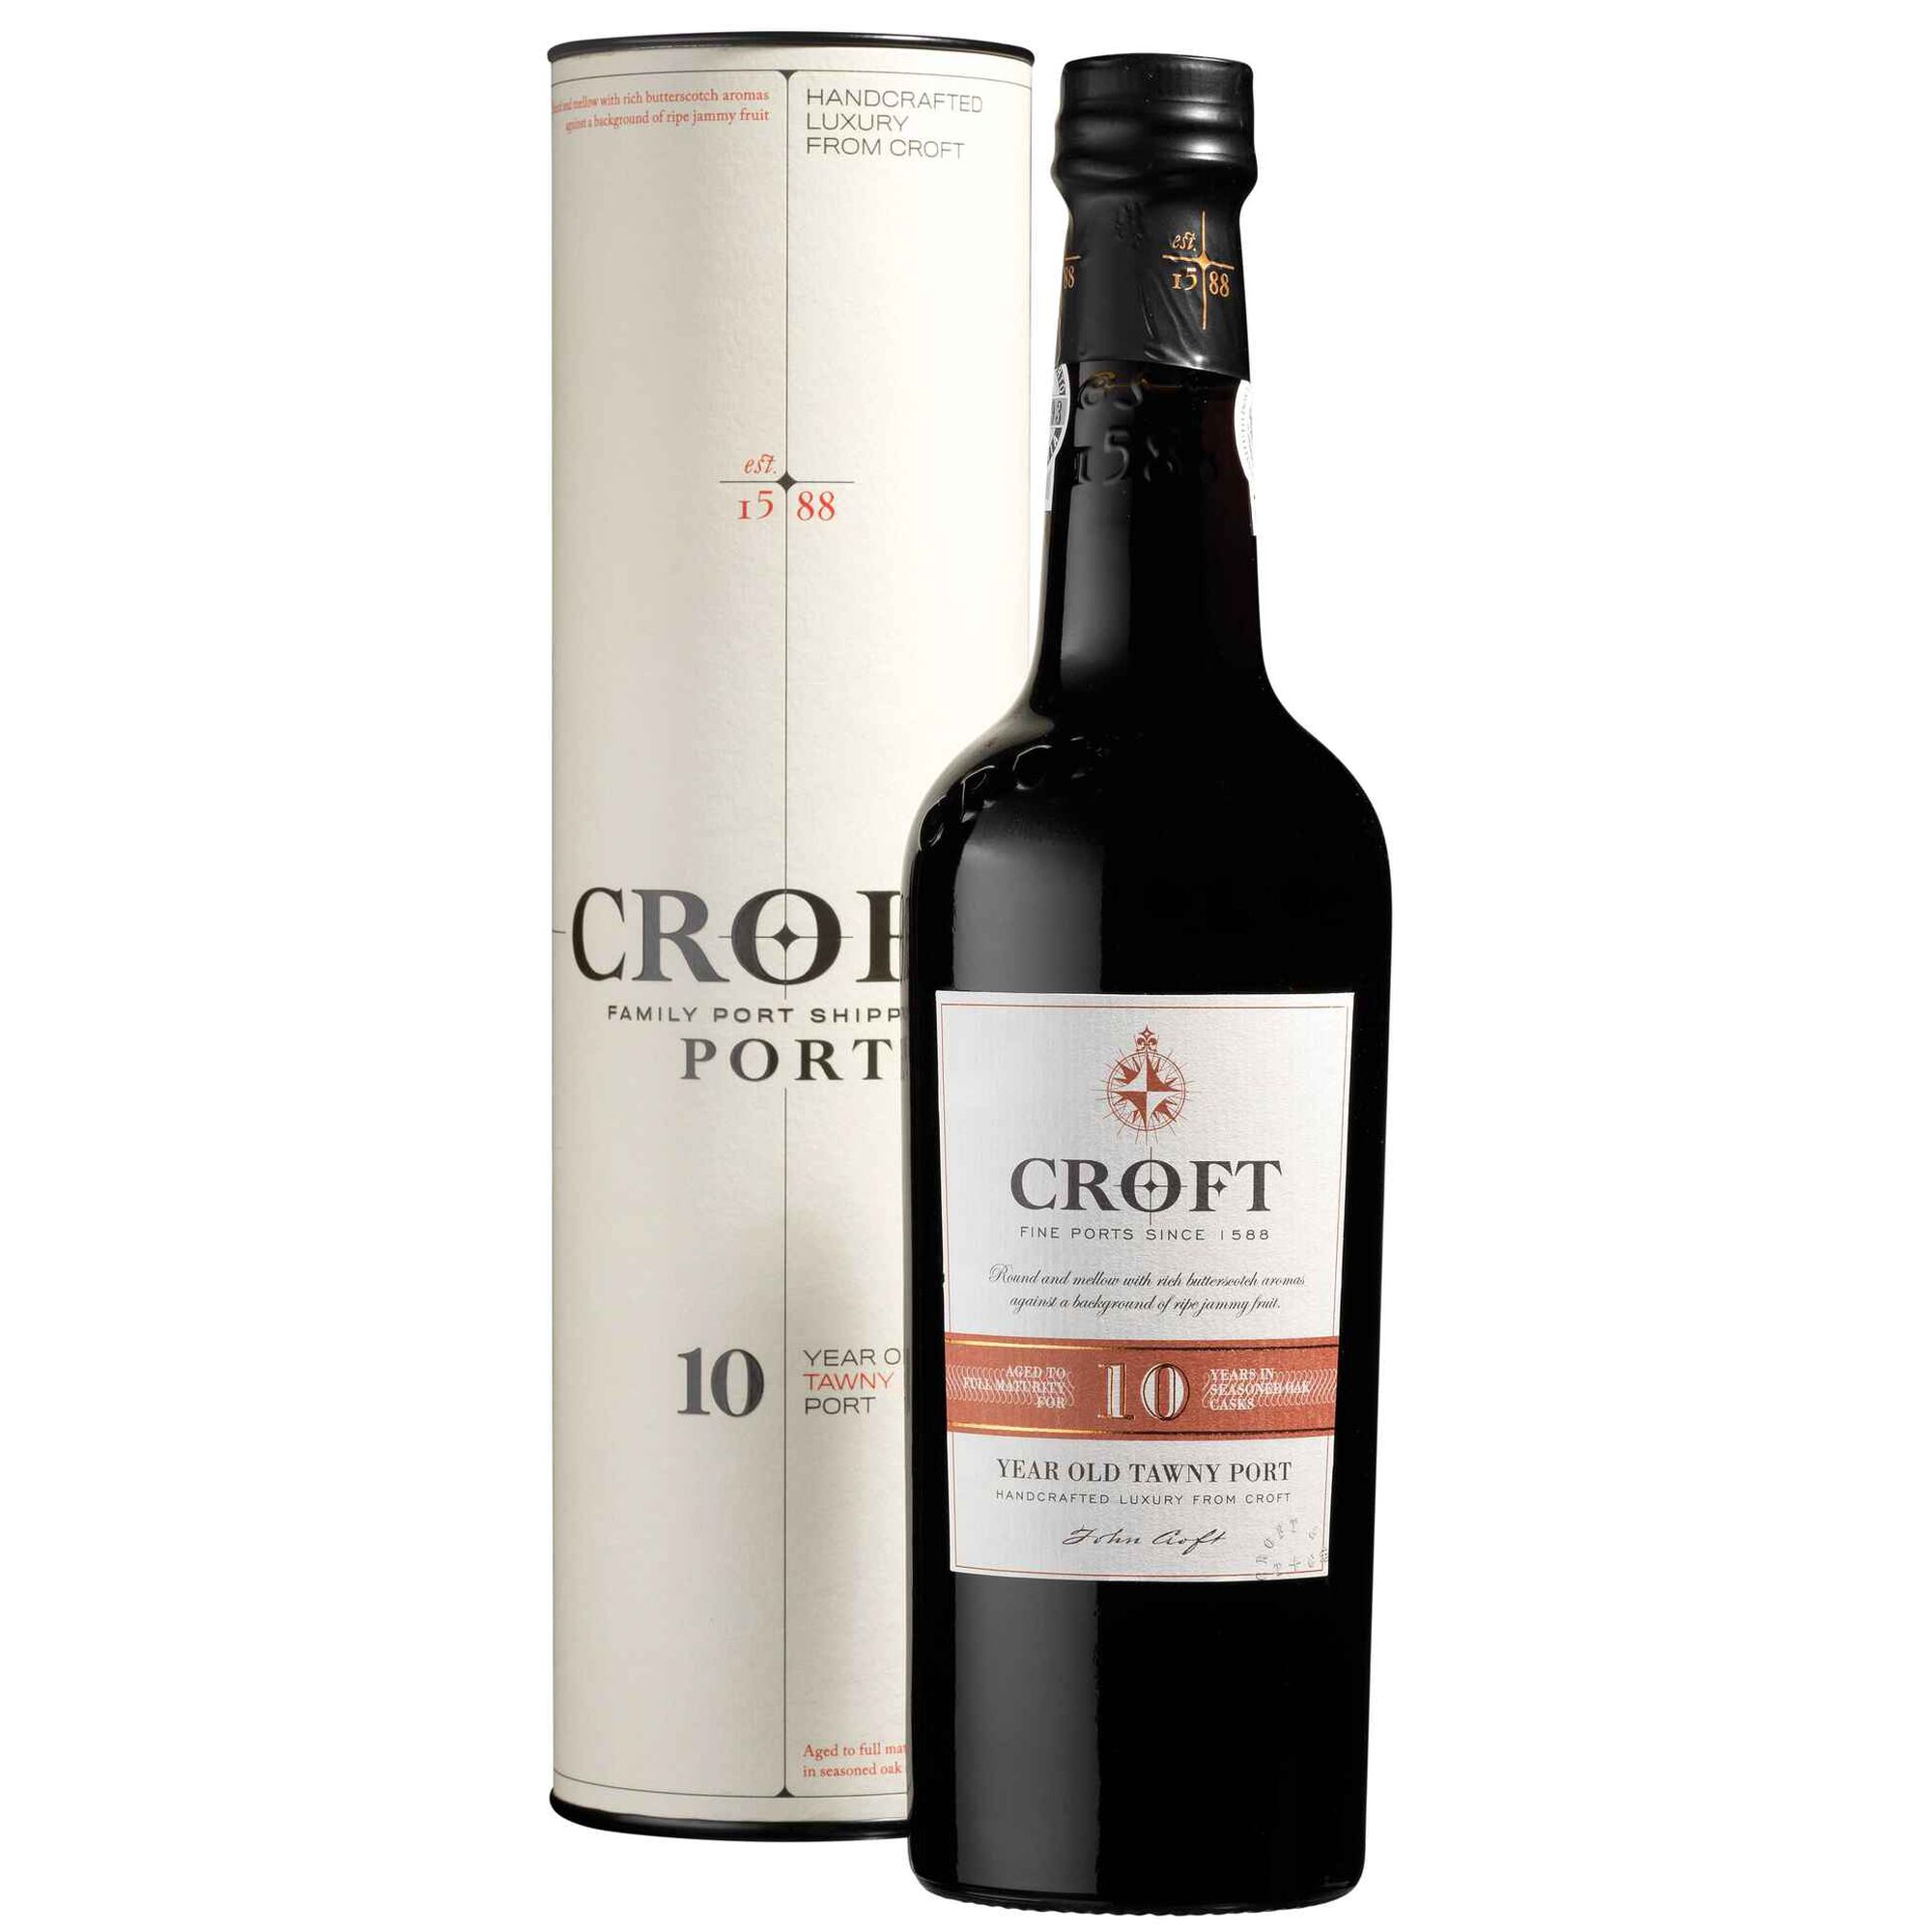 Croft Vinho do Porto Branco